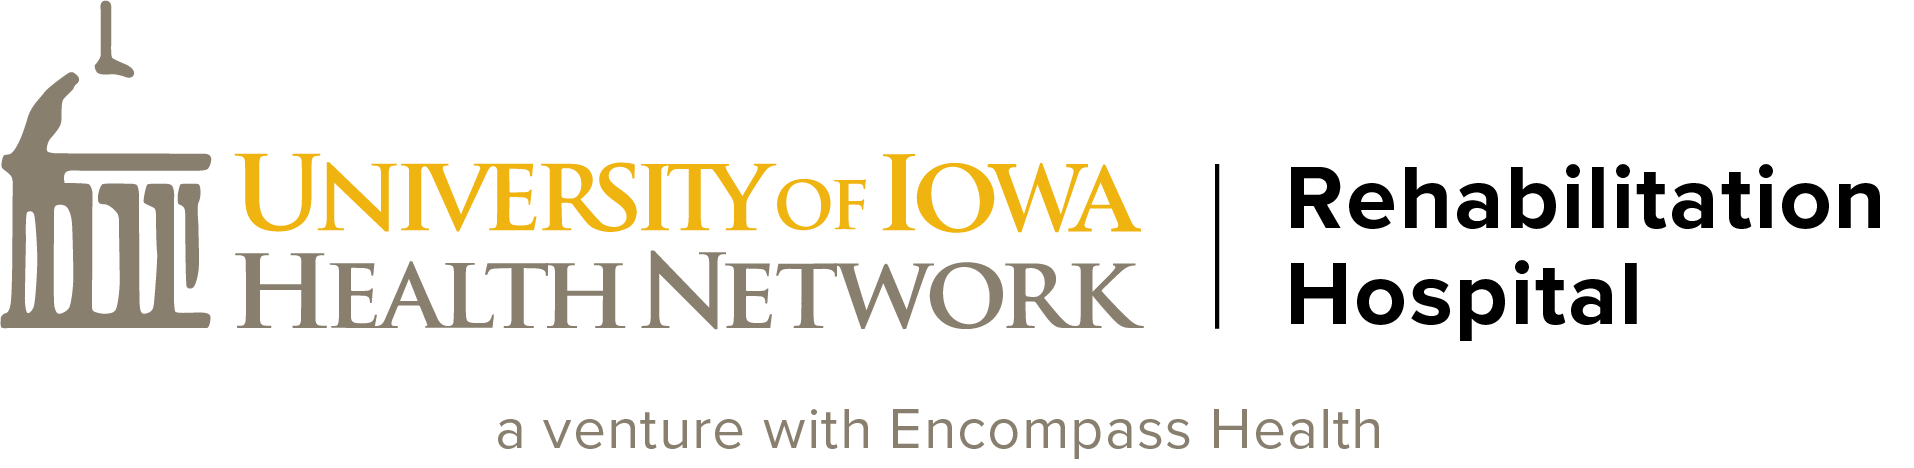 University of Iowa Health Network Logo